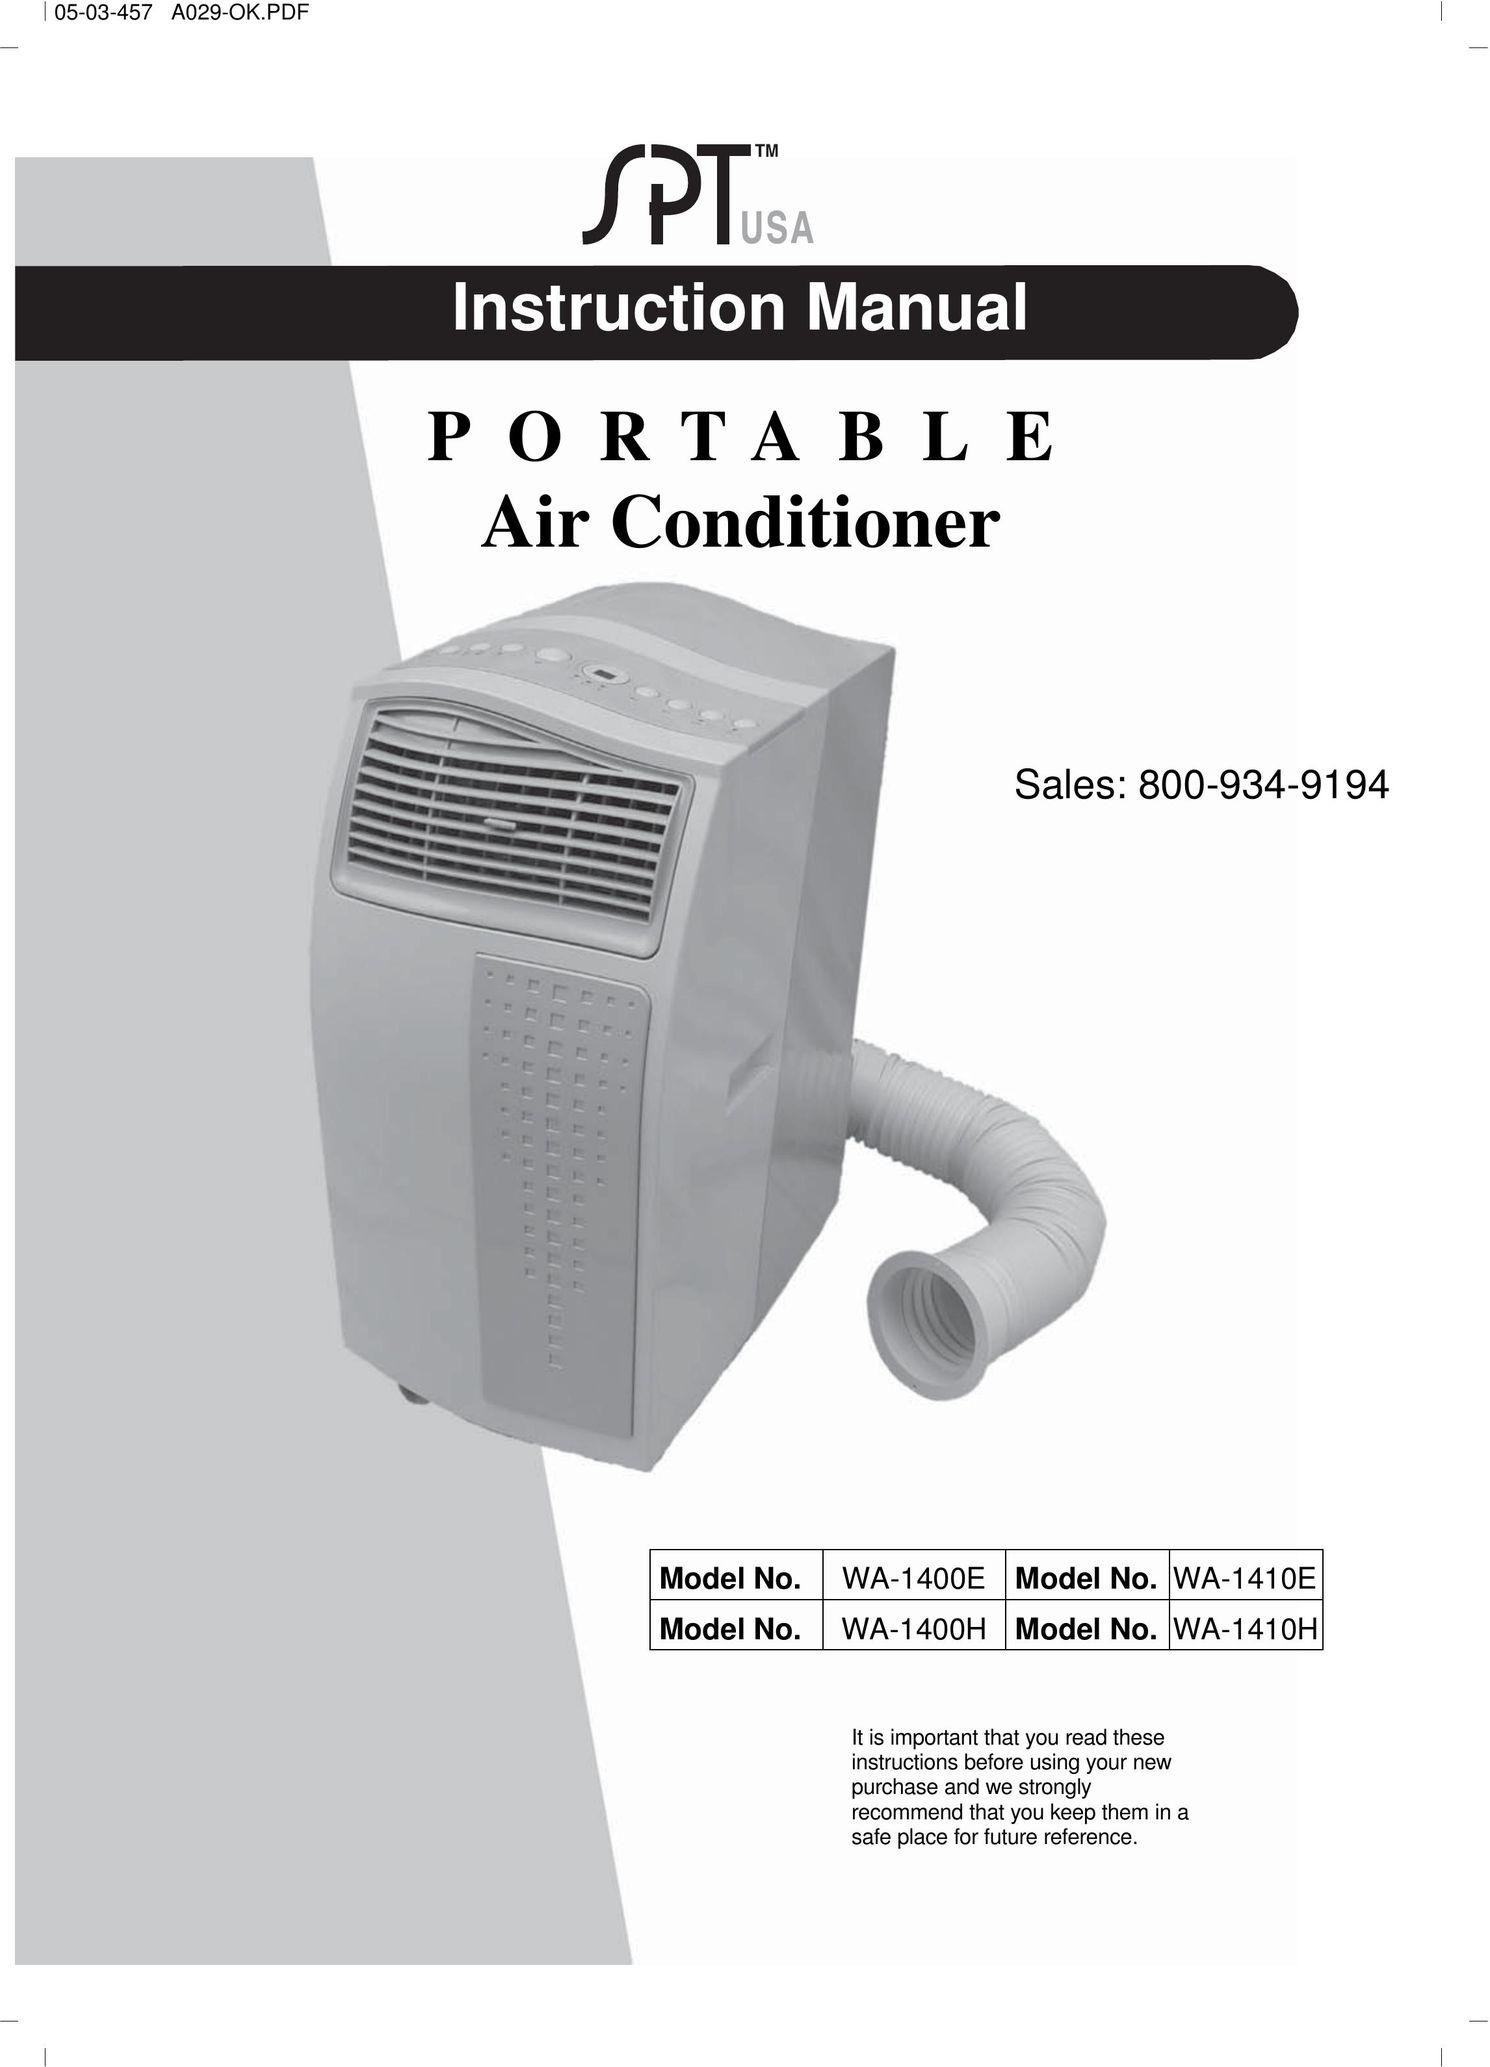 Sunpentown Intl WA-1410H Air Conditioner User Manual